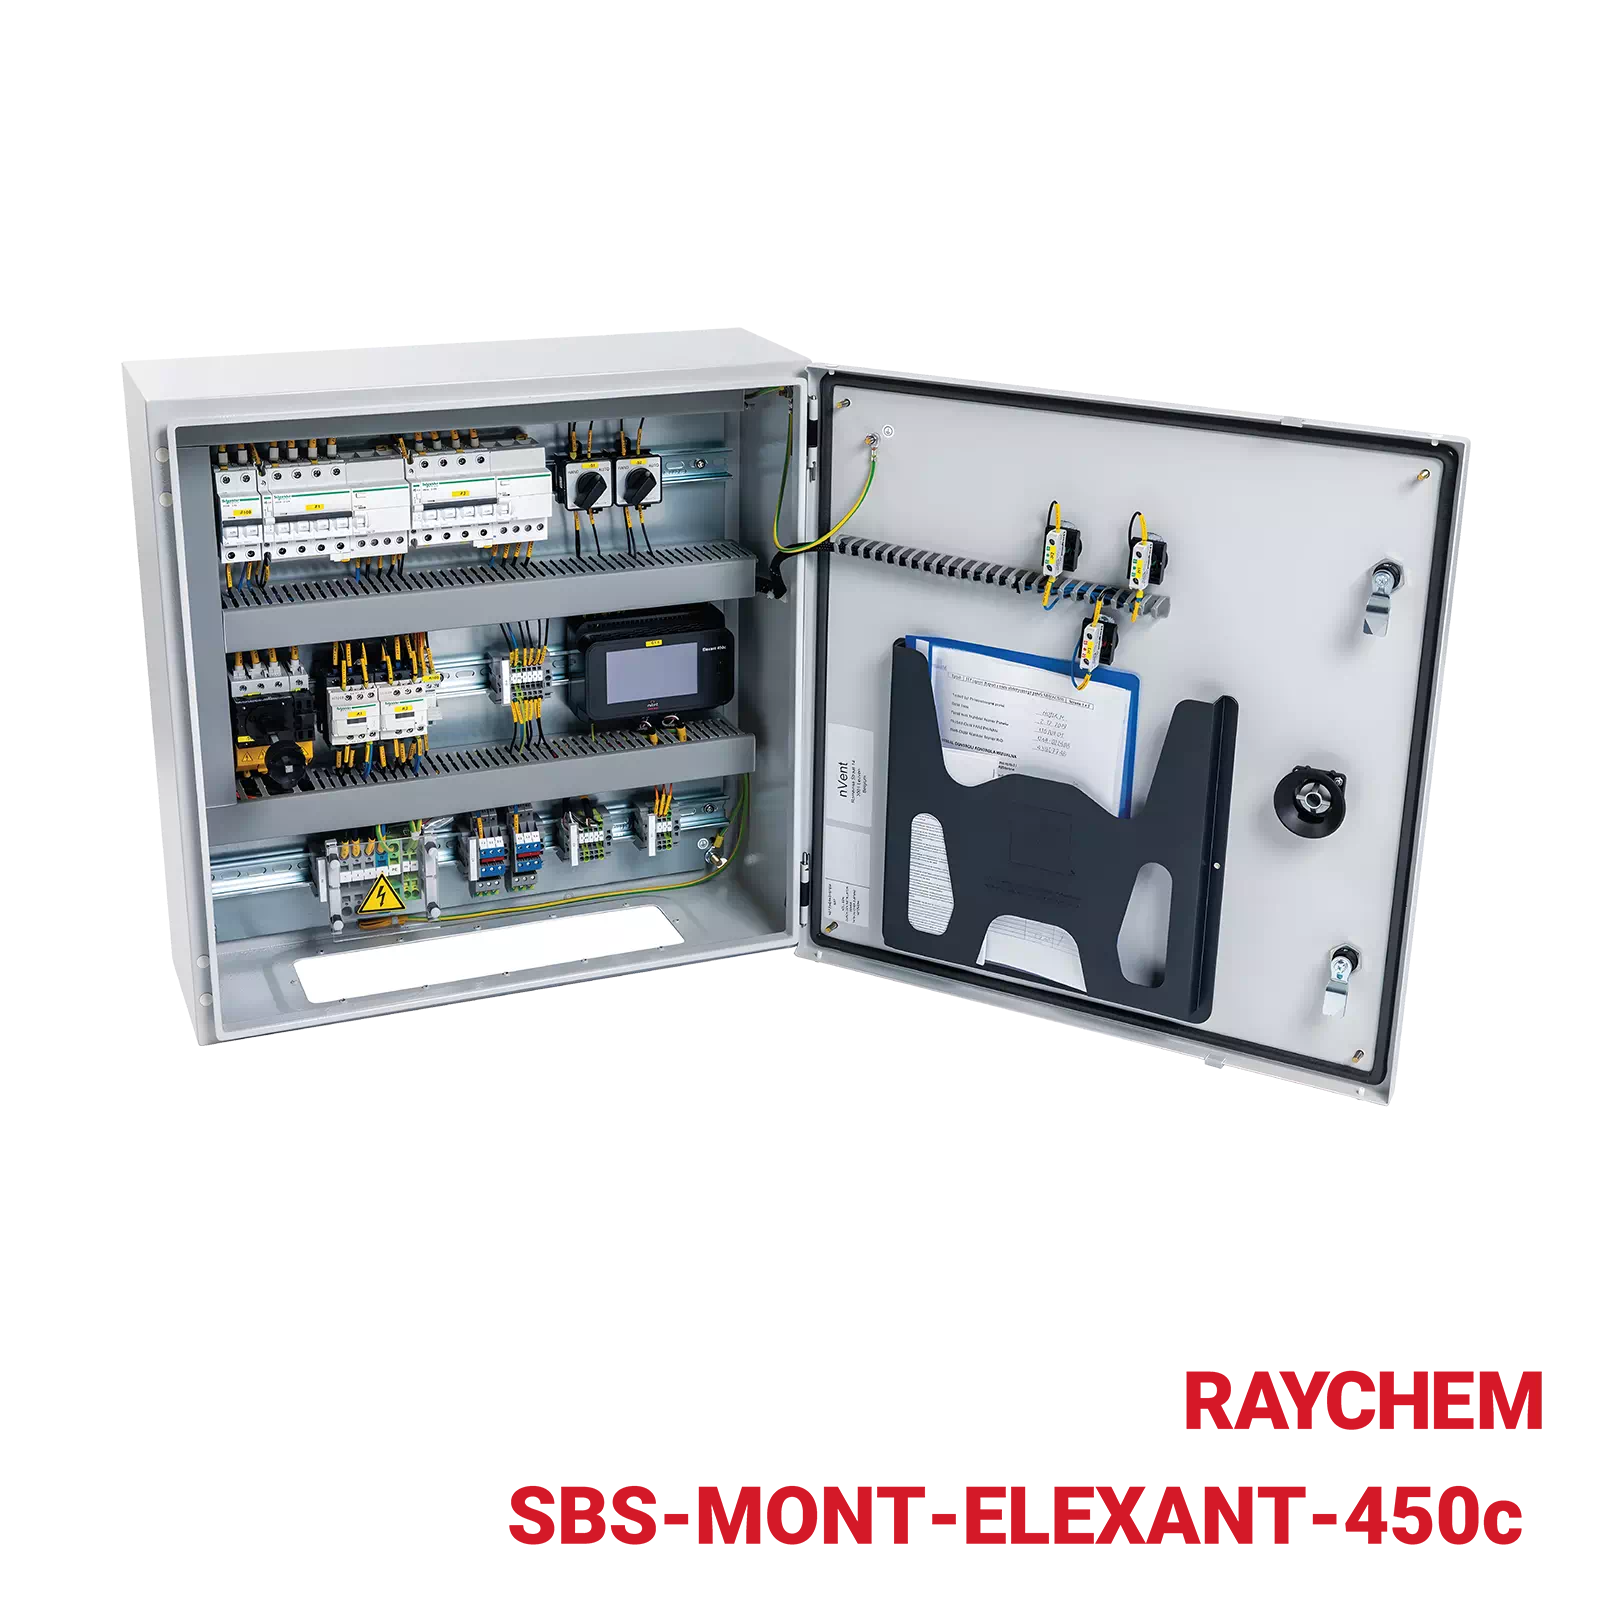 SBS-MONT-ELEXANT-450c-Raychem-Industrial-Heating